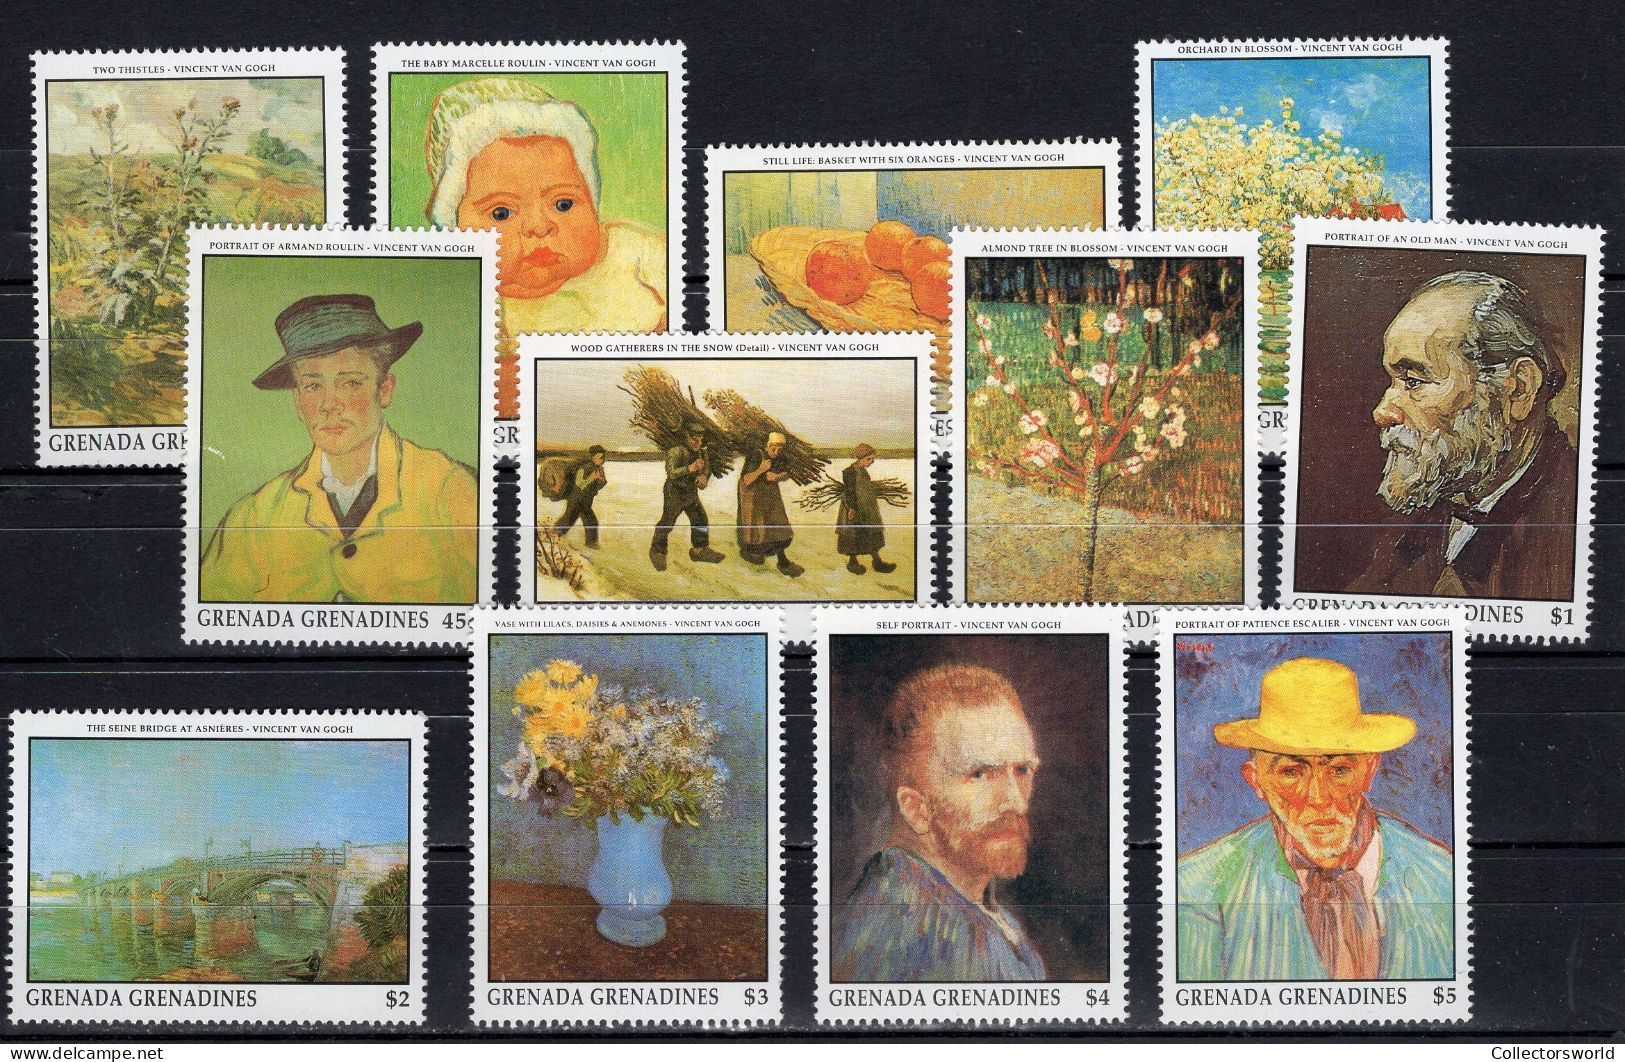 Grenada Grenadines 1991 Serie 12v Paintings Vincent Van Gogh * 45ct Stamp Tiny Damage! MNH - Grenada (1974-...)